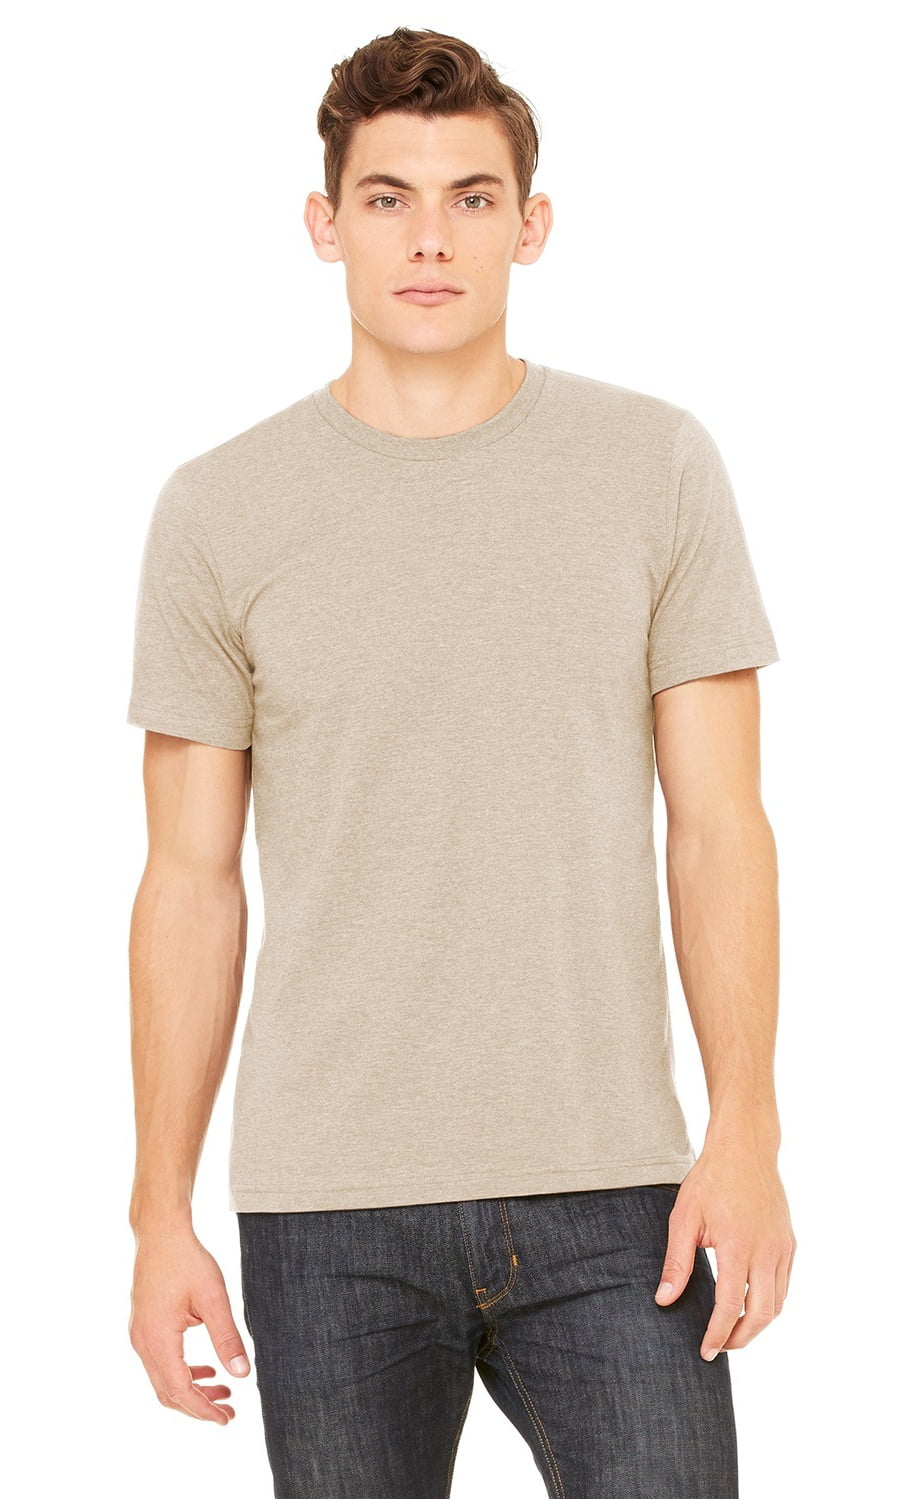 The Bella + Canvas Unisex Jersey Short Sleeve T-Shirt - HEATHER TAN - M ...